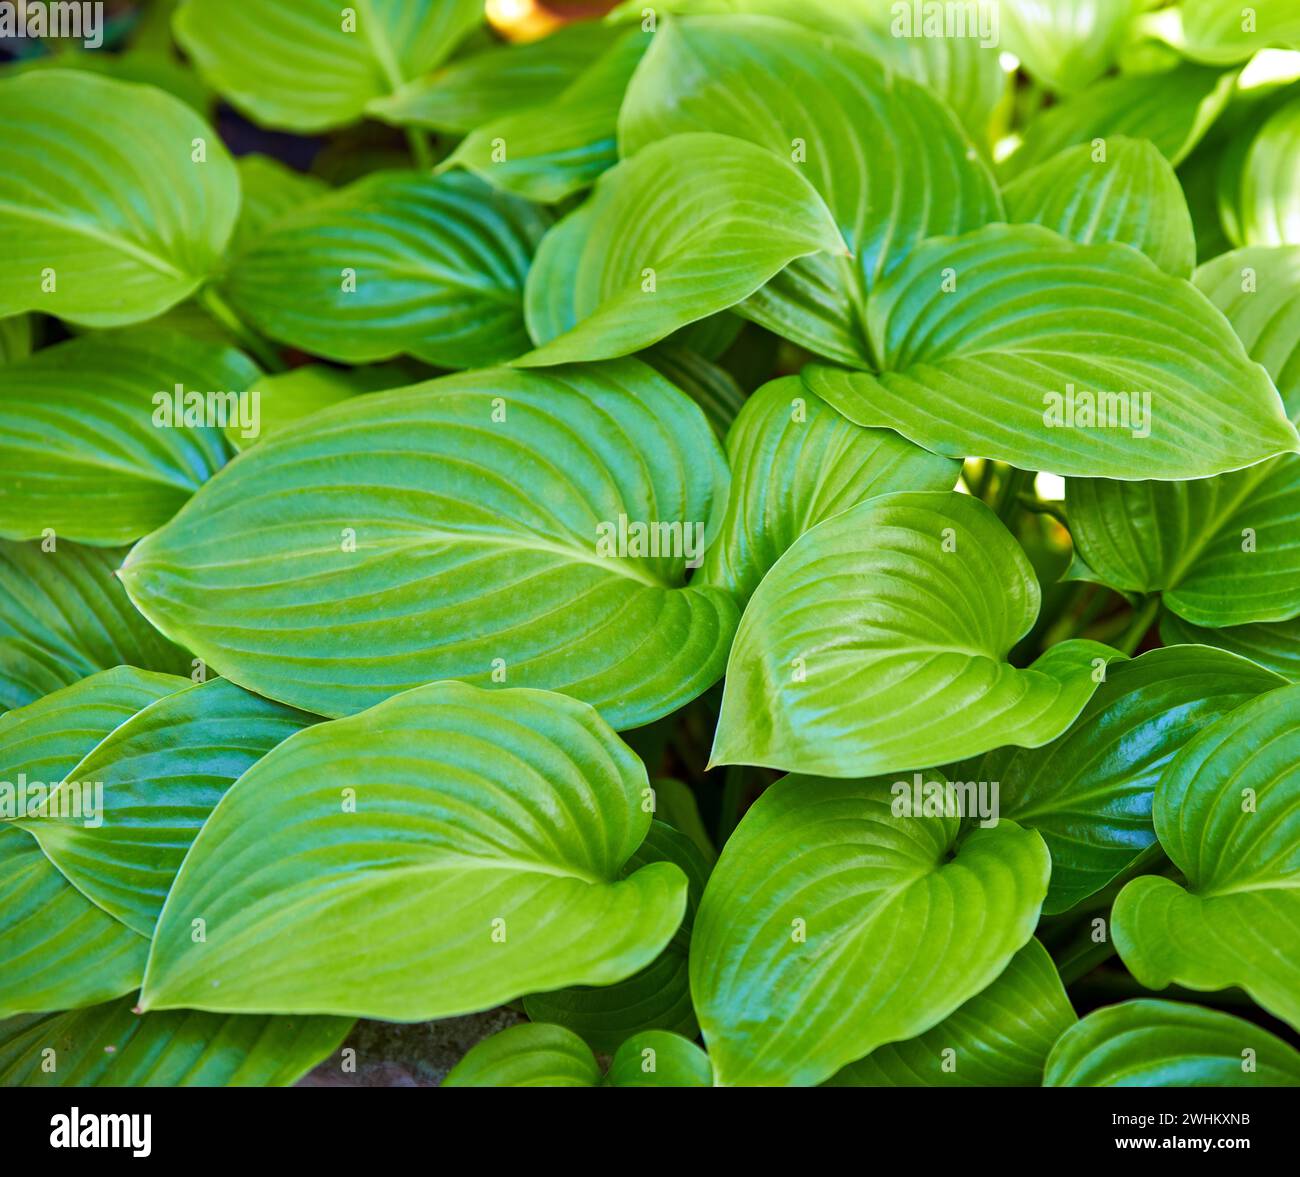 Close up green leaves background, lush hosta foliage texture Stock Photo